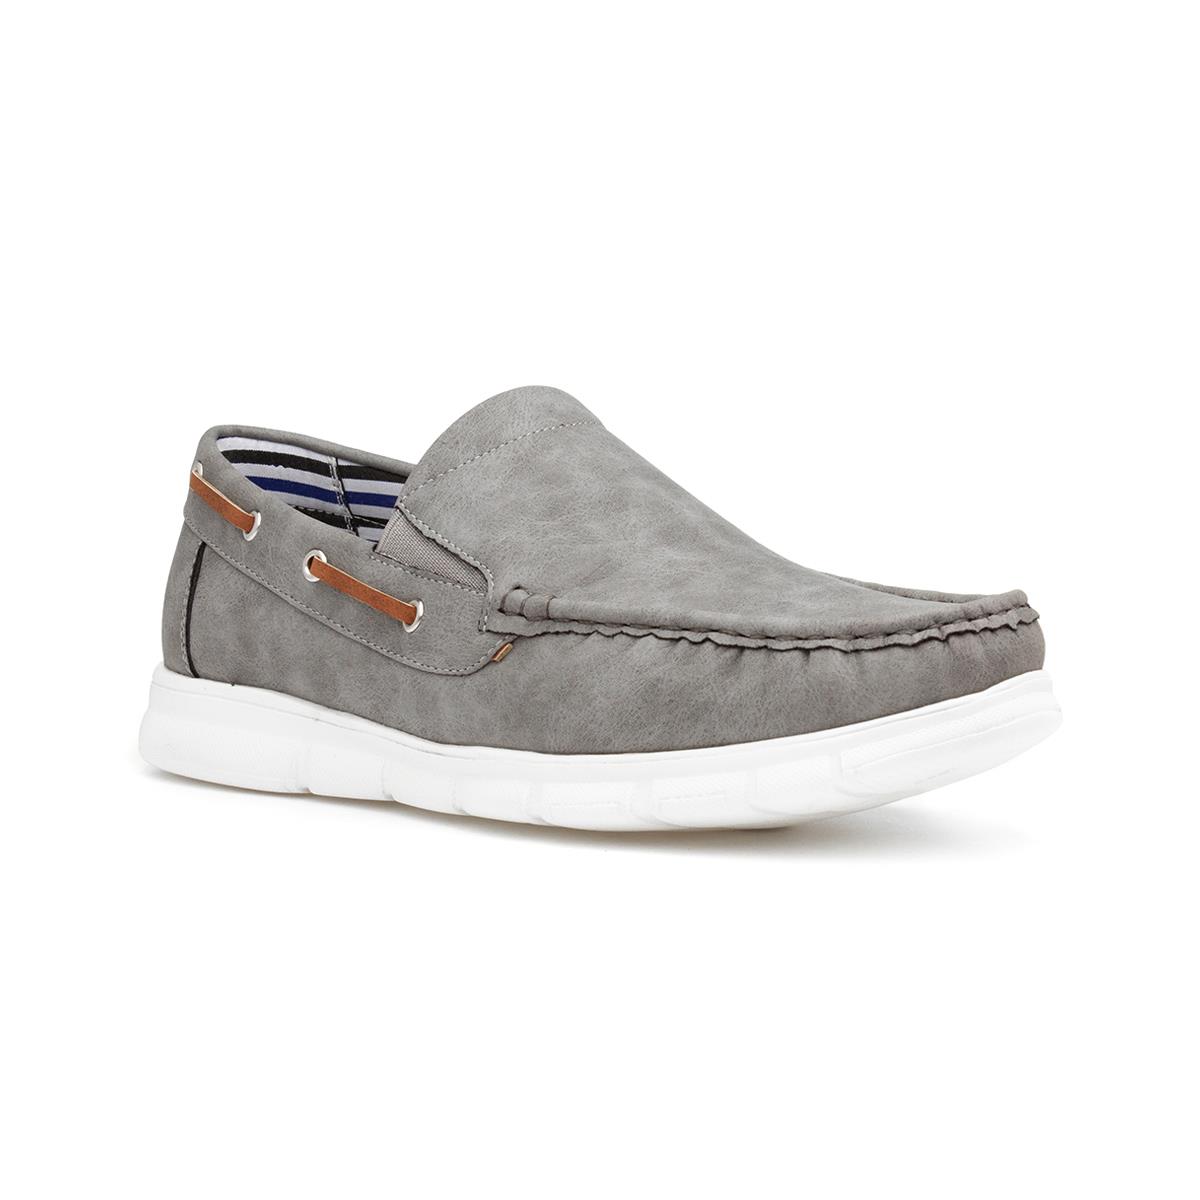 Cushion Walk Declan Grey Slip On Loafer-52375 | Shoe Zone